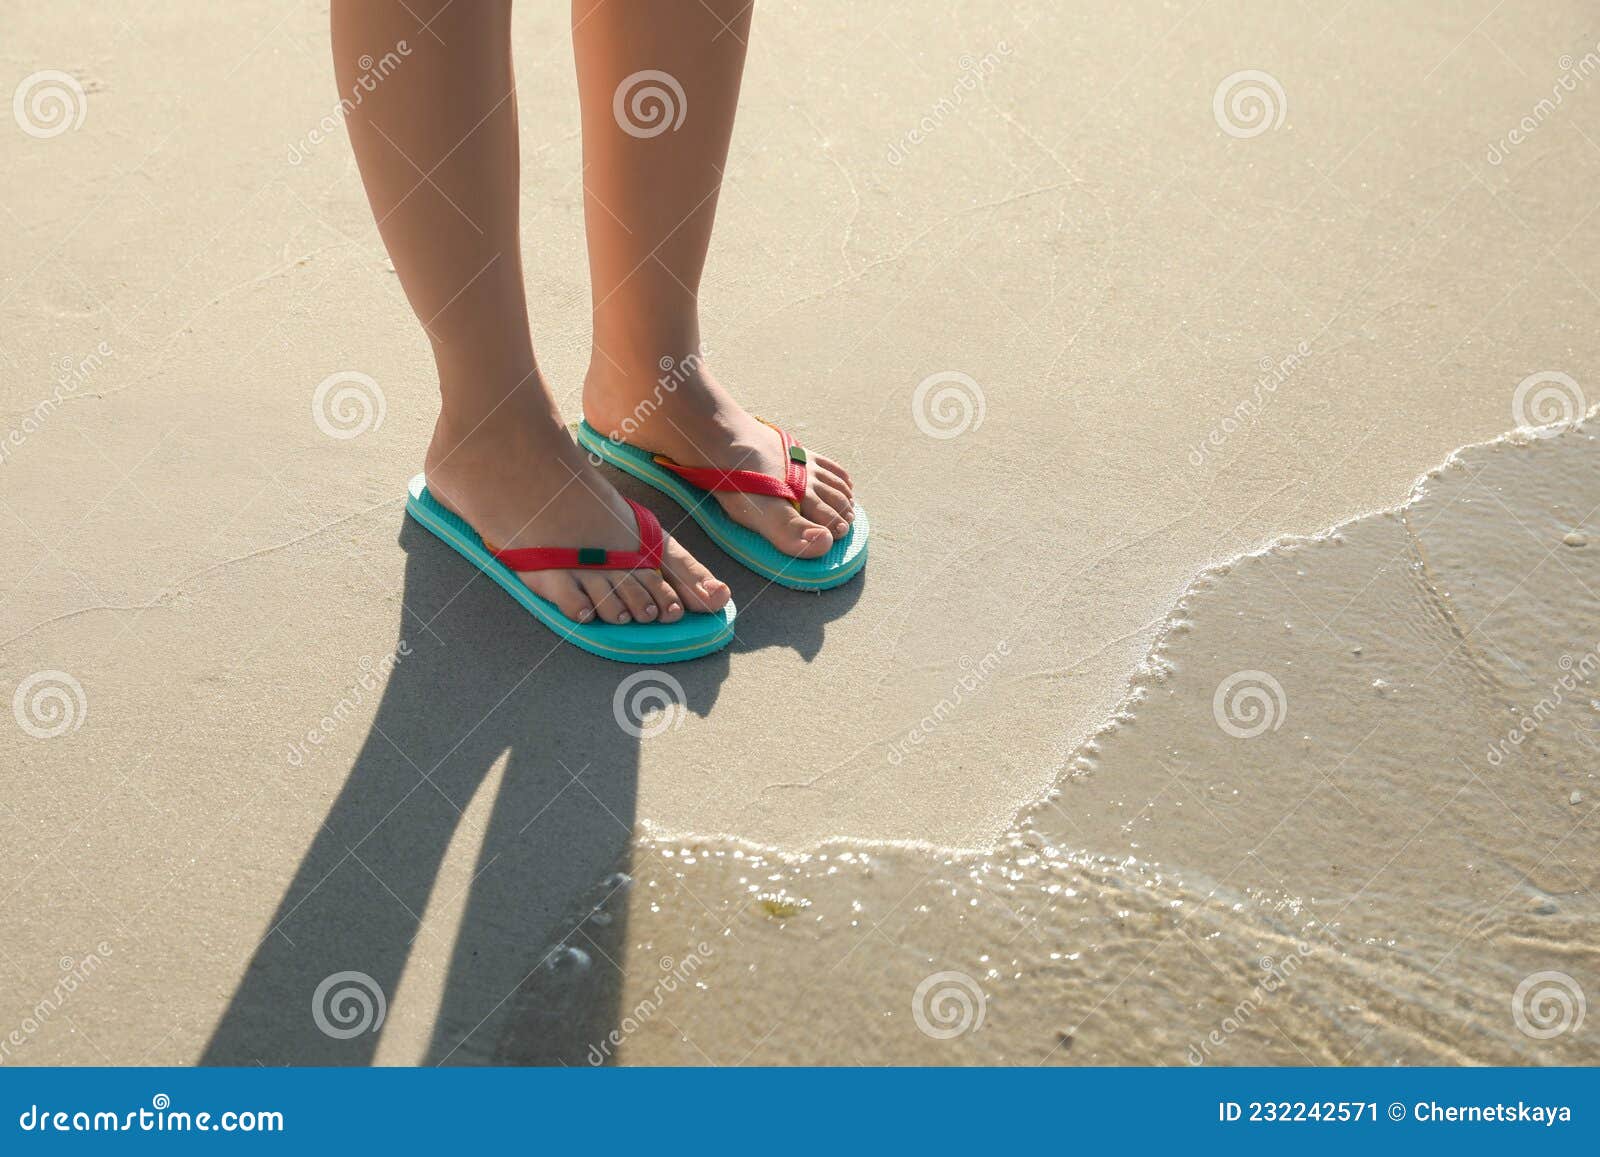 Woman Wearing Flip Flops on Sandy Beach, Closeup Stock Image - Image of ...